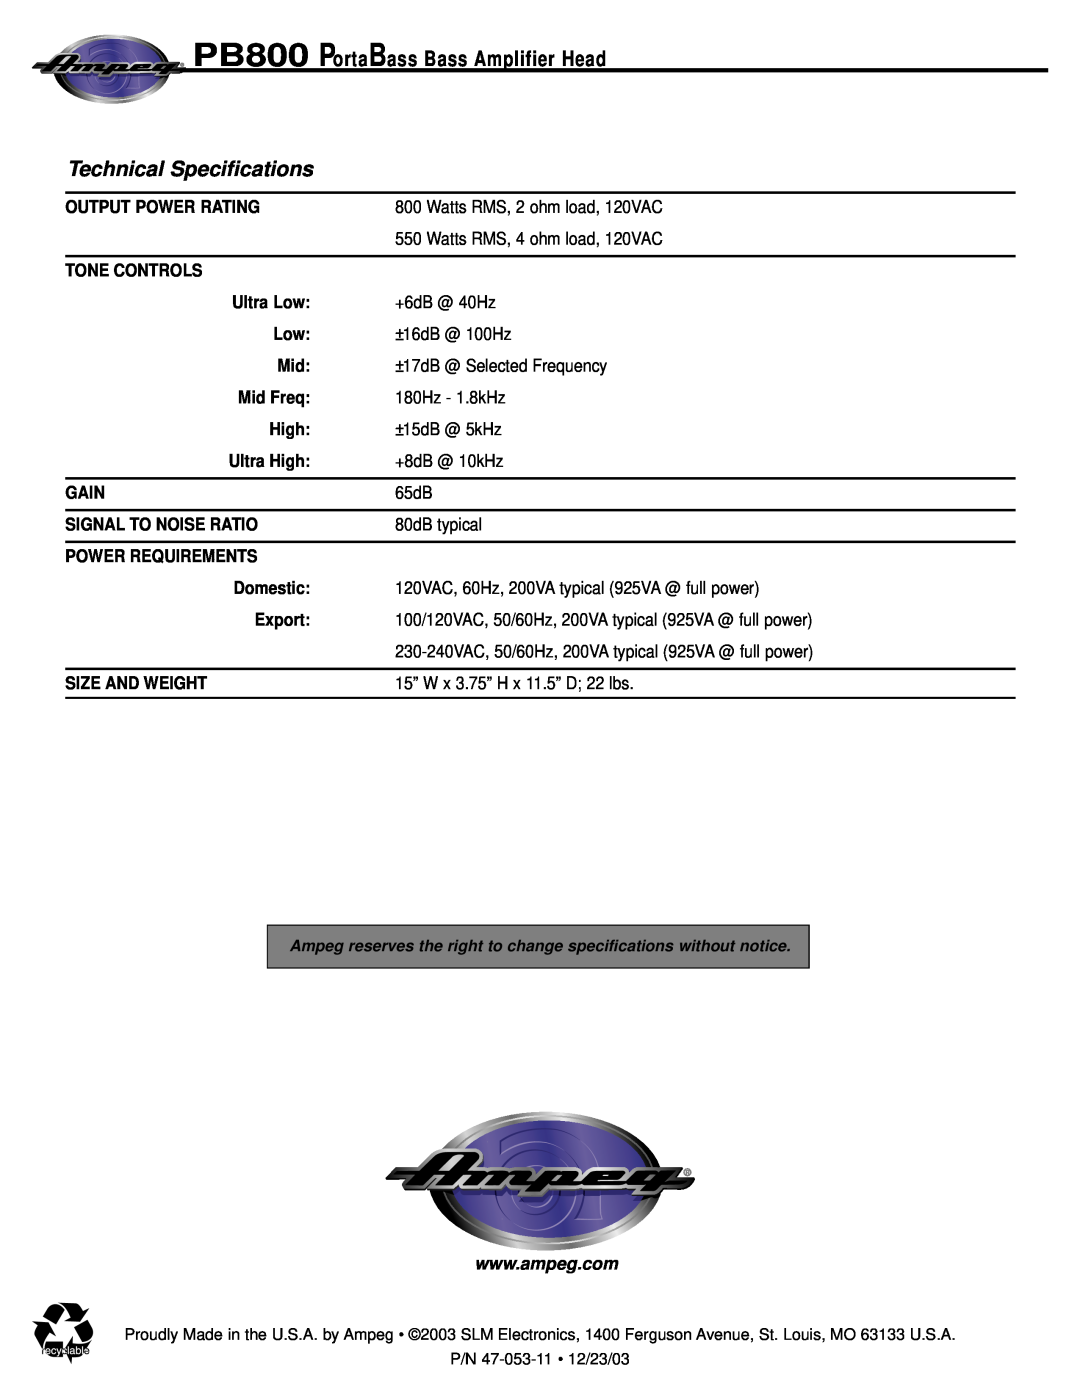 Ampeg PortaBass800 manual Technical Specifications, PB800 PortaBass Bass Amplifier Head 